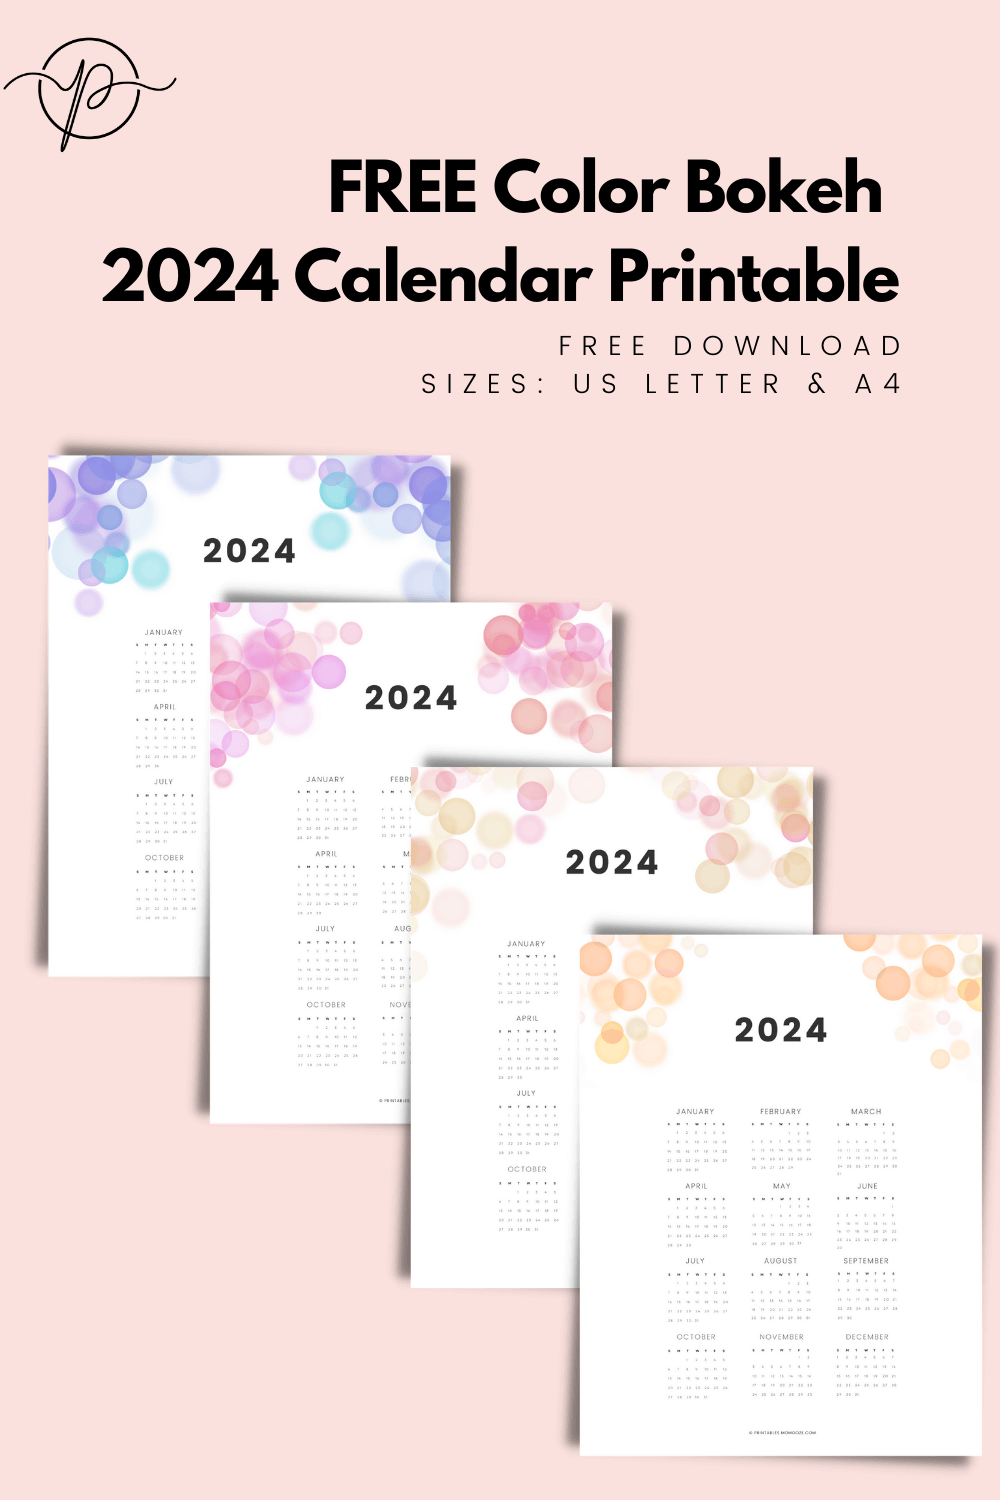 FREE 2024 Calendar Printables 24 Gorgeous Designs - Free Printable 2024 Desk Calendar With Holidays